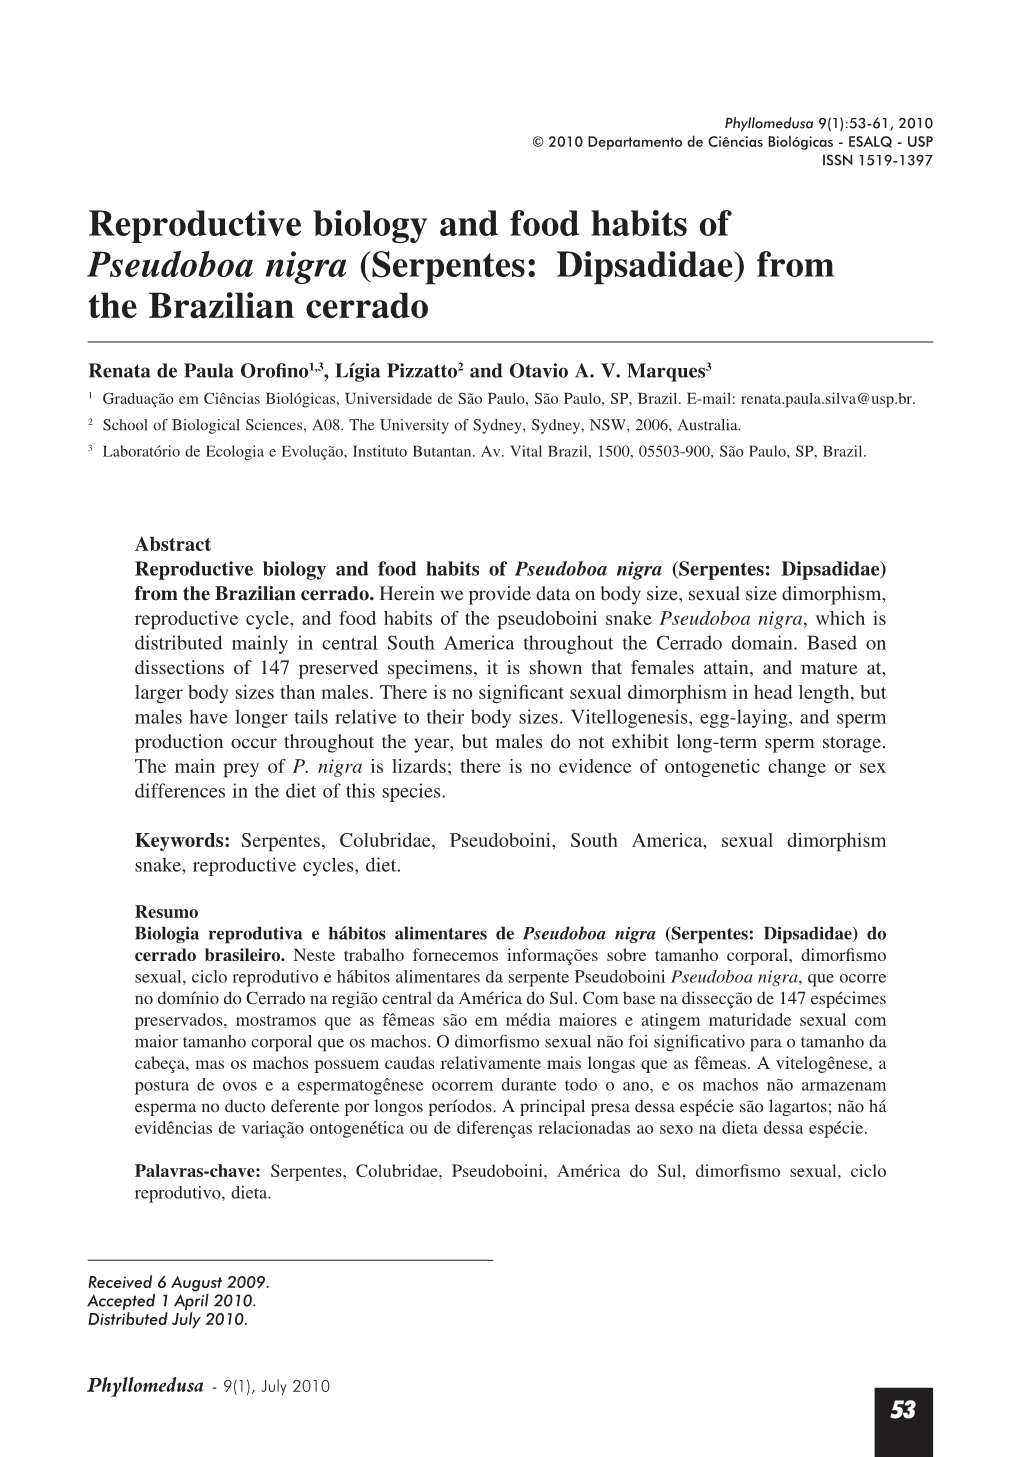 Reproductive Biology and Food Habits of Pseudoboa Nigra (Serpentes: Dipsadidae) from the Brazilian Cerrado